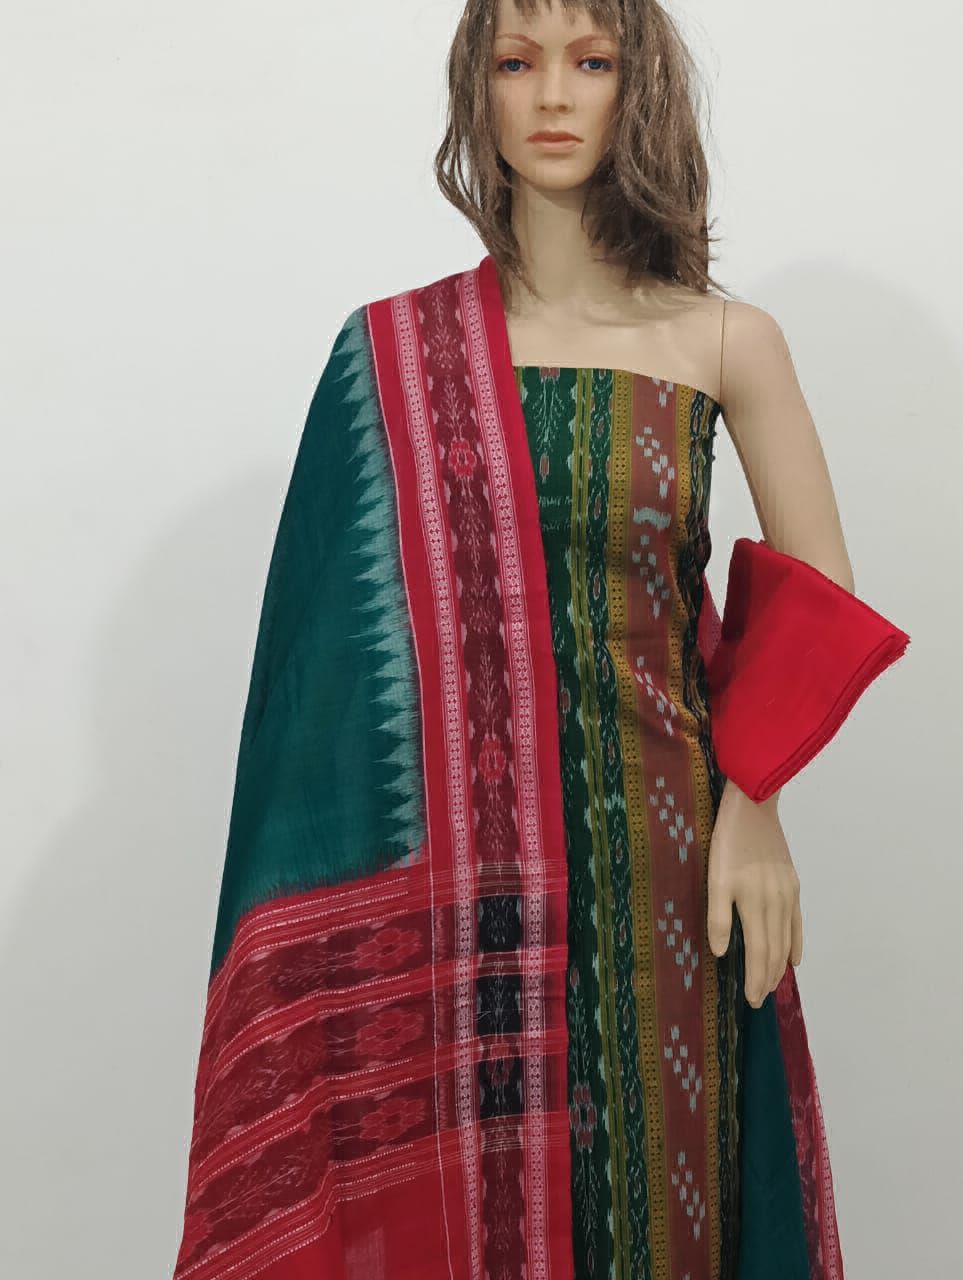 Buy Womens Handloom Dress Material Hd9 Multicoloured at Amazon.in